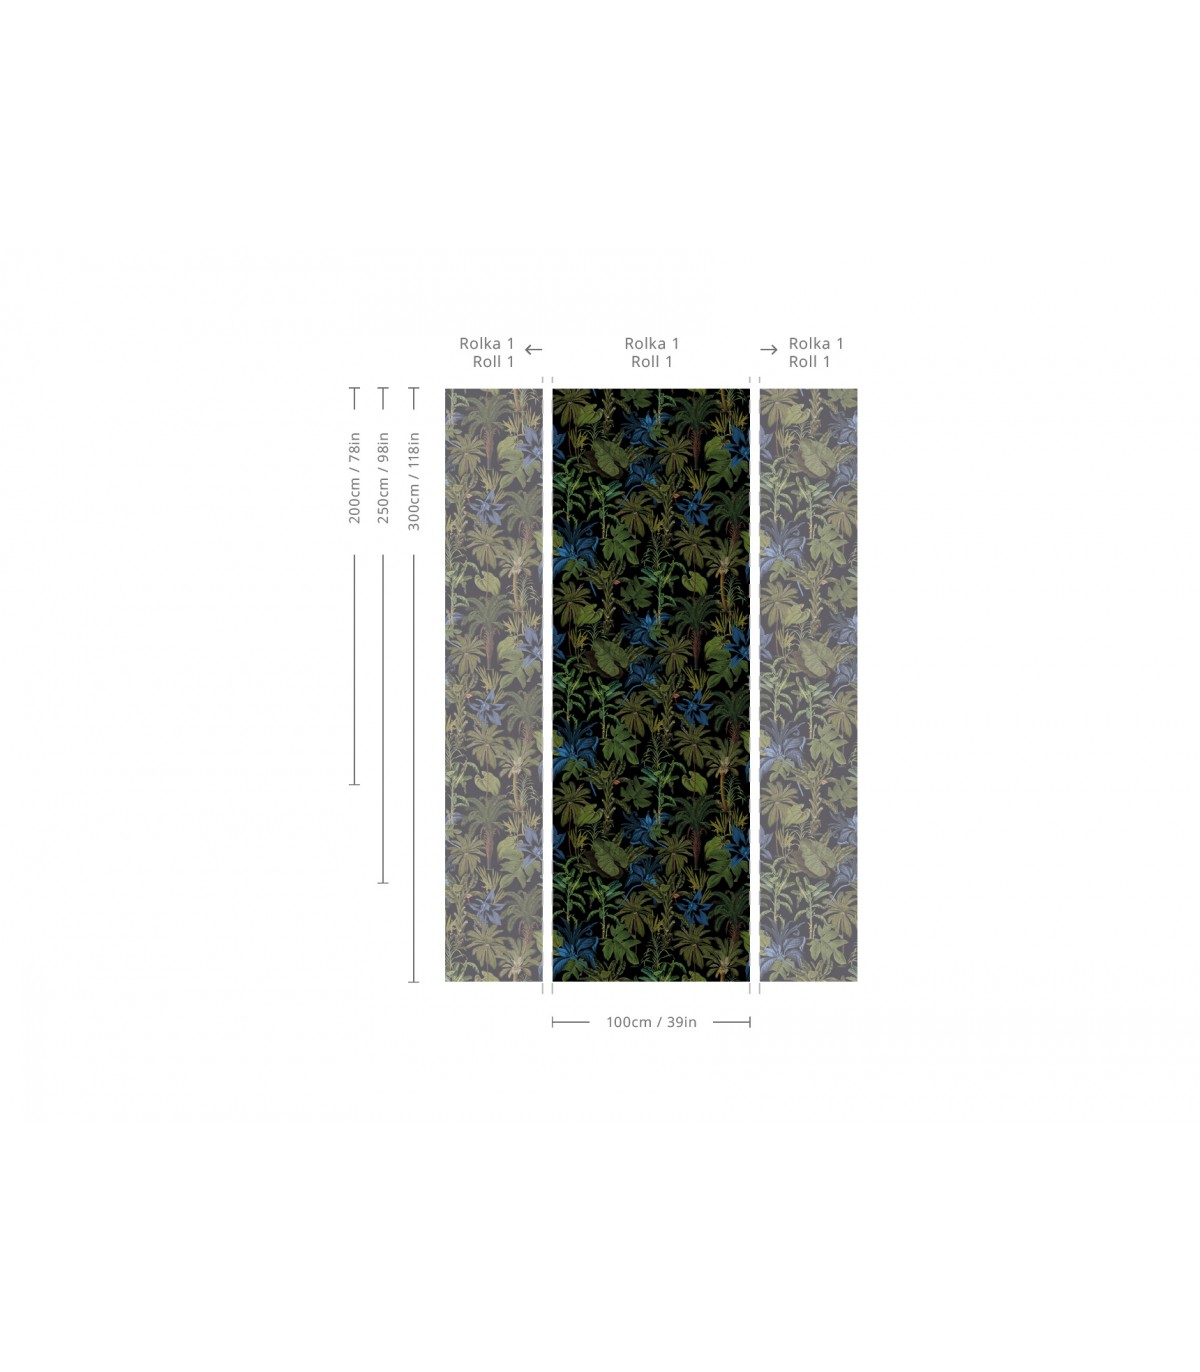 Thick Forest Tapete - Wallcolors  - Exklusive Hintergrundbilder